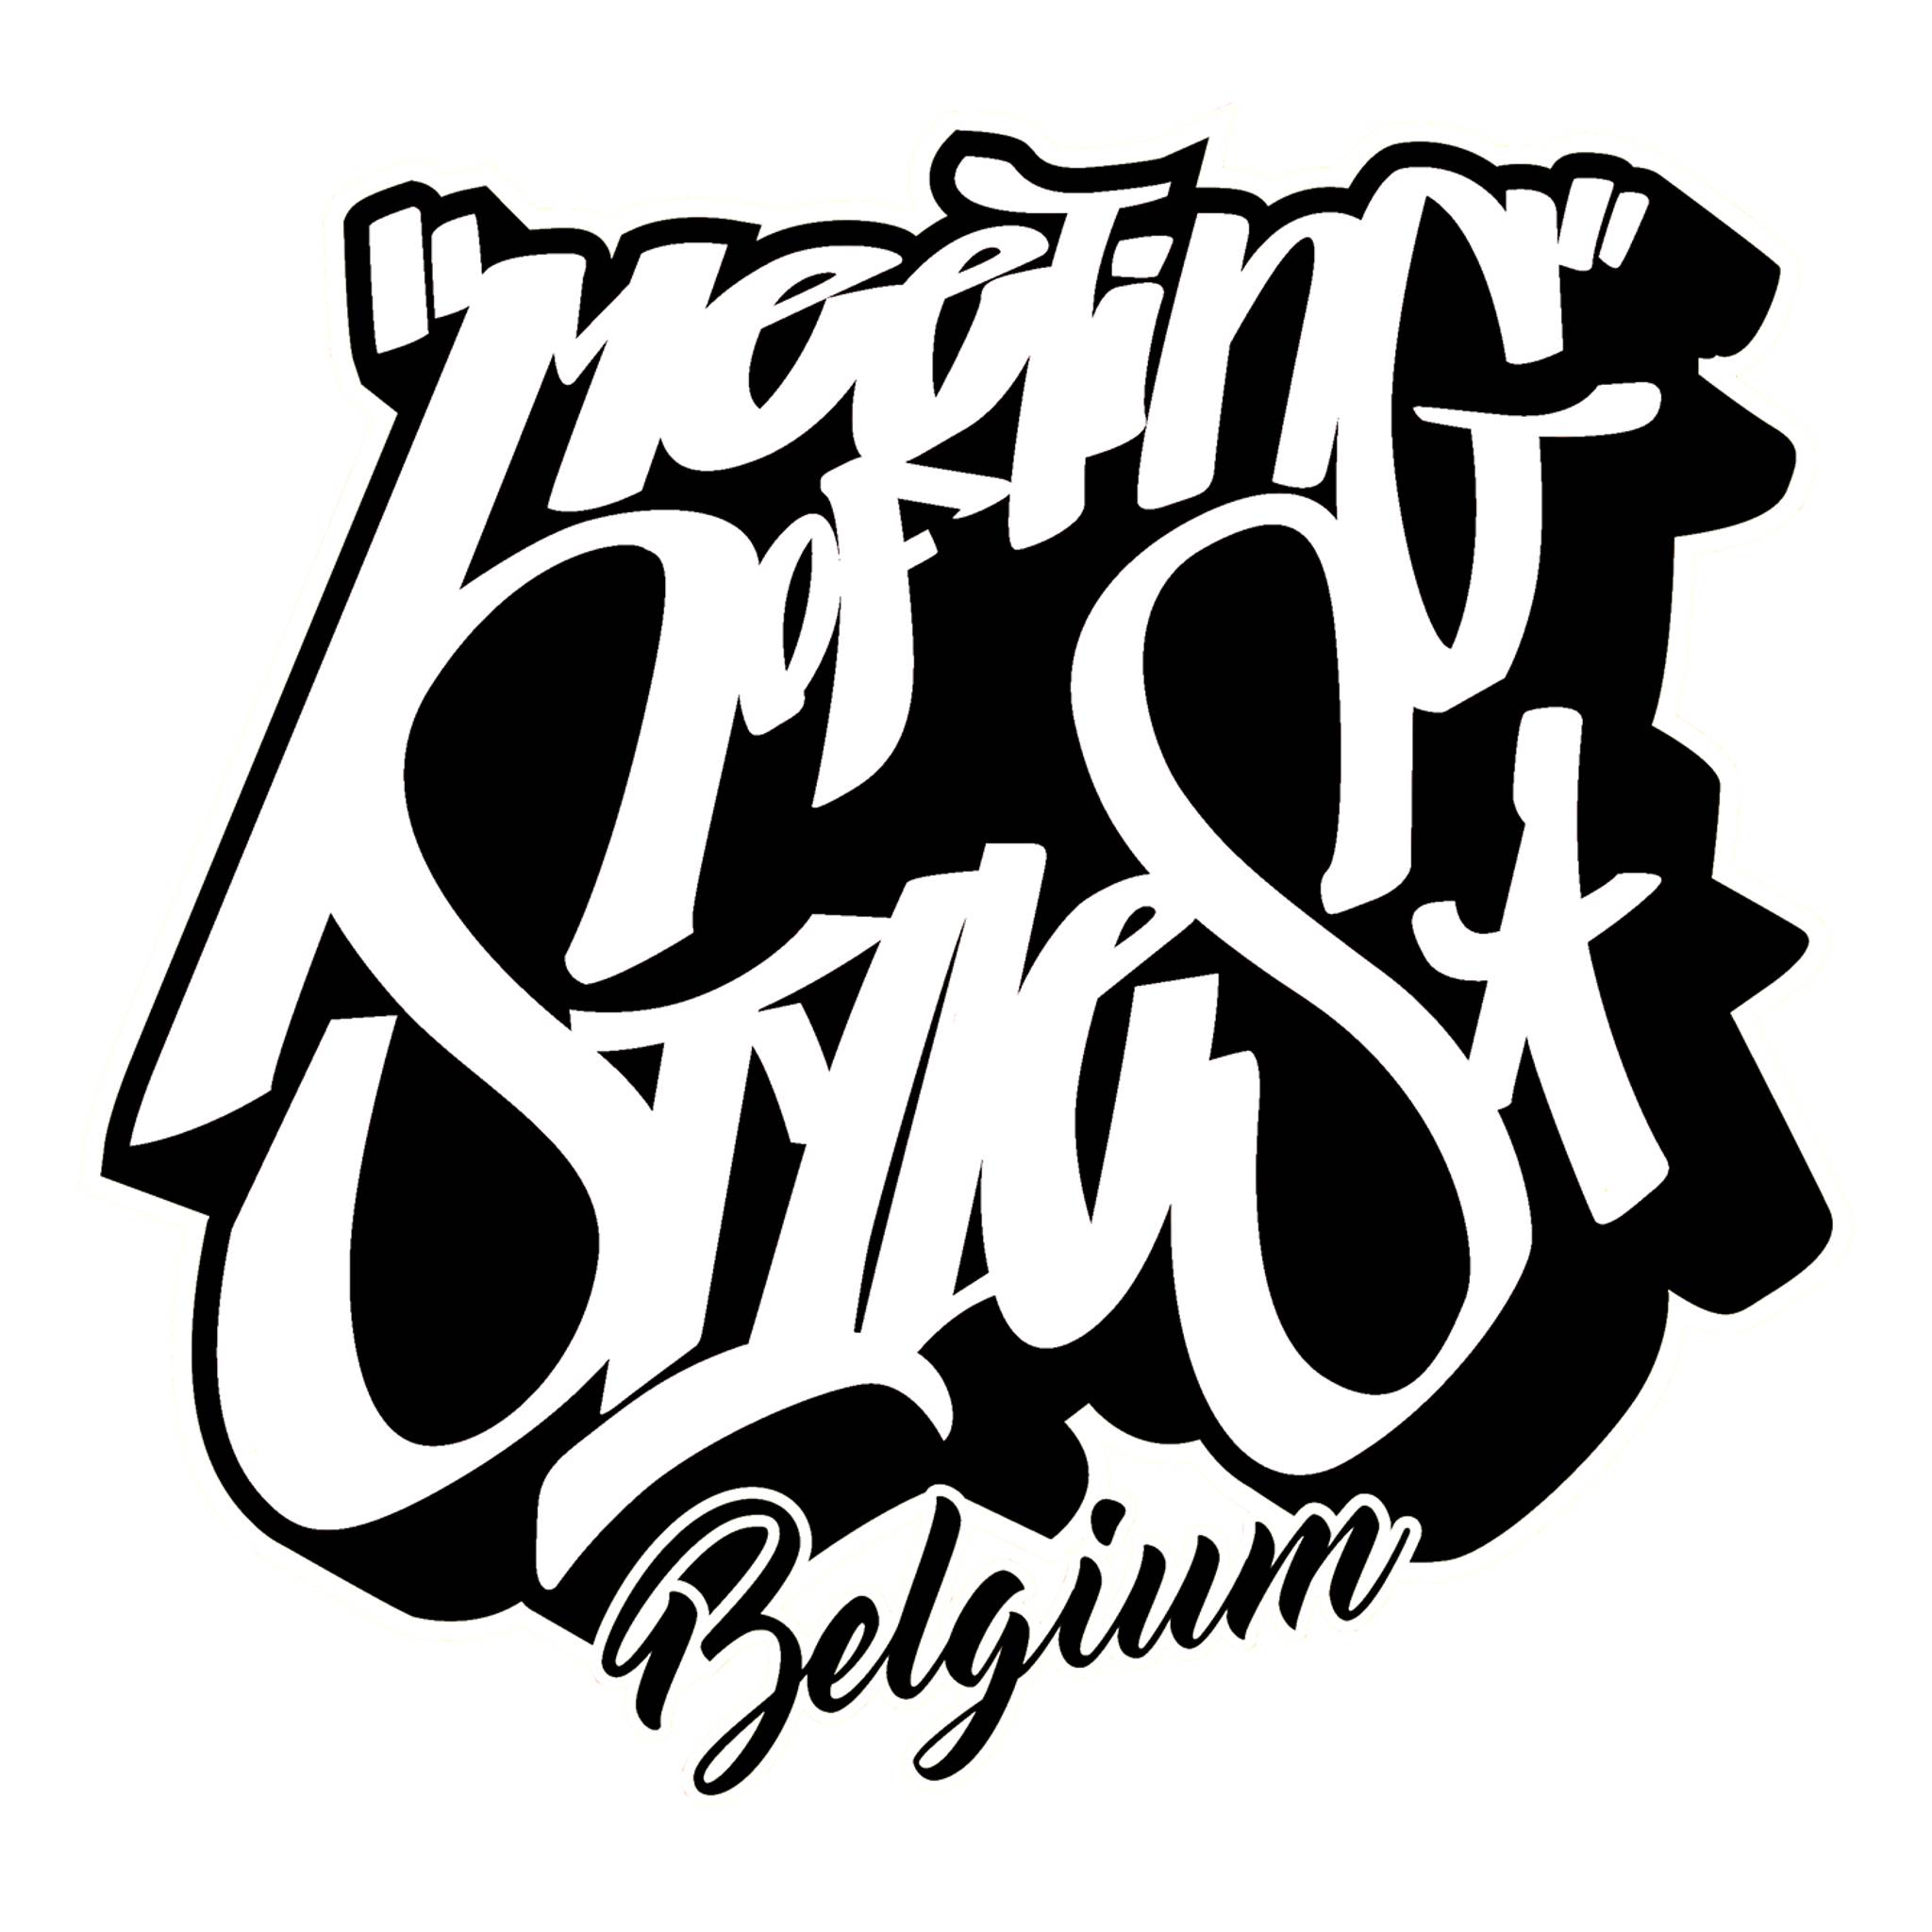 &mdash;Meeting of Styles Belgium